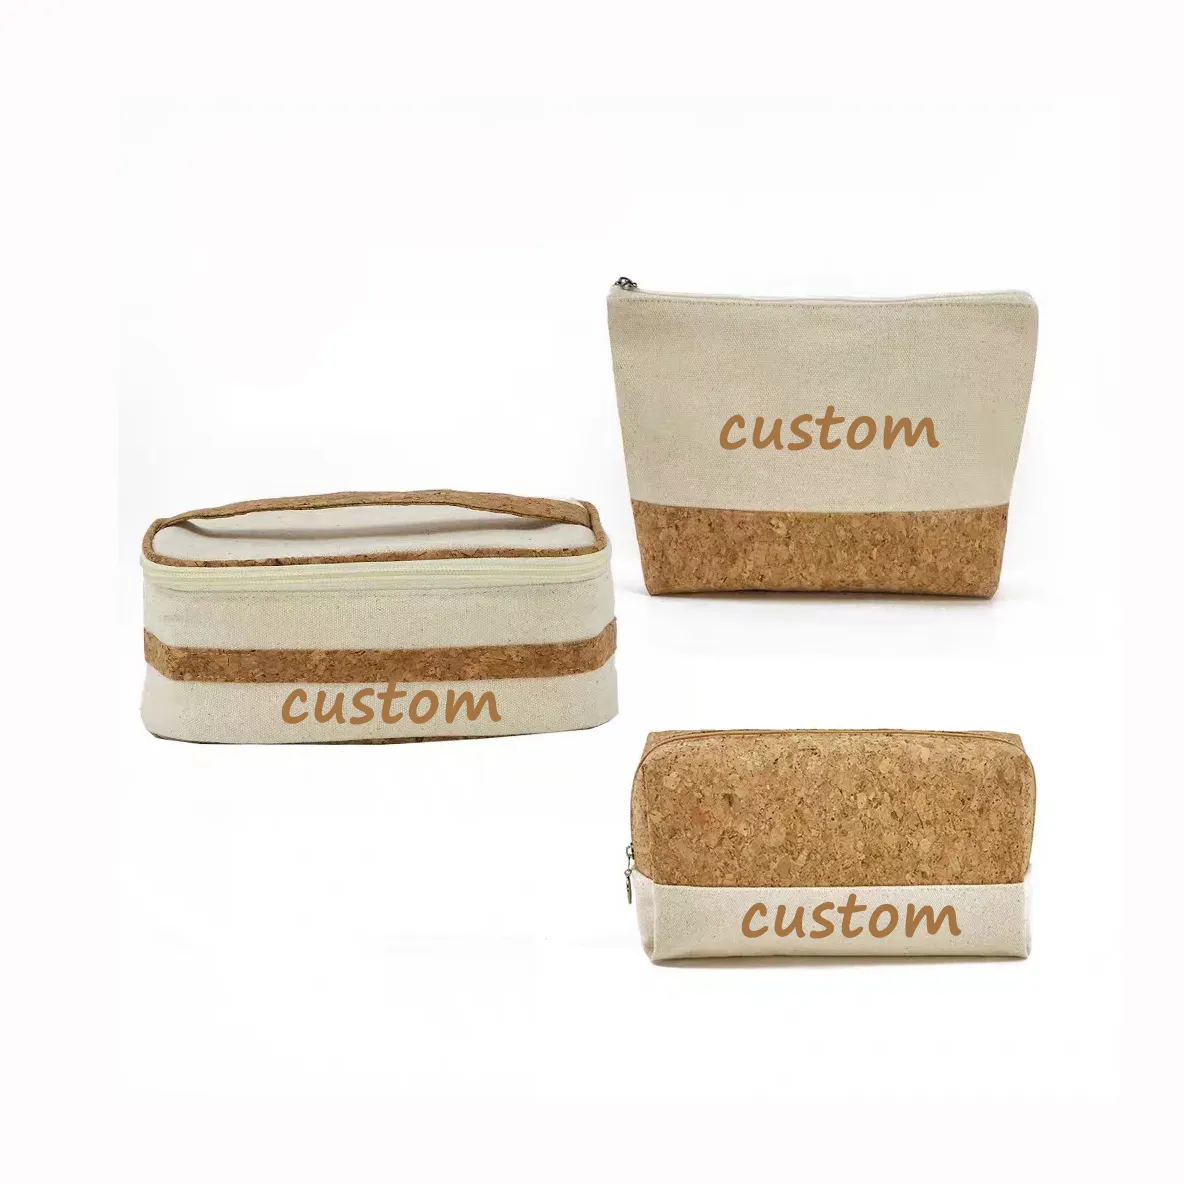 European-style cotton canvas finishing bag Primary wood grain travel toiletry bag set Environmental protection cork makeup bag